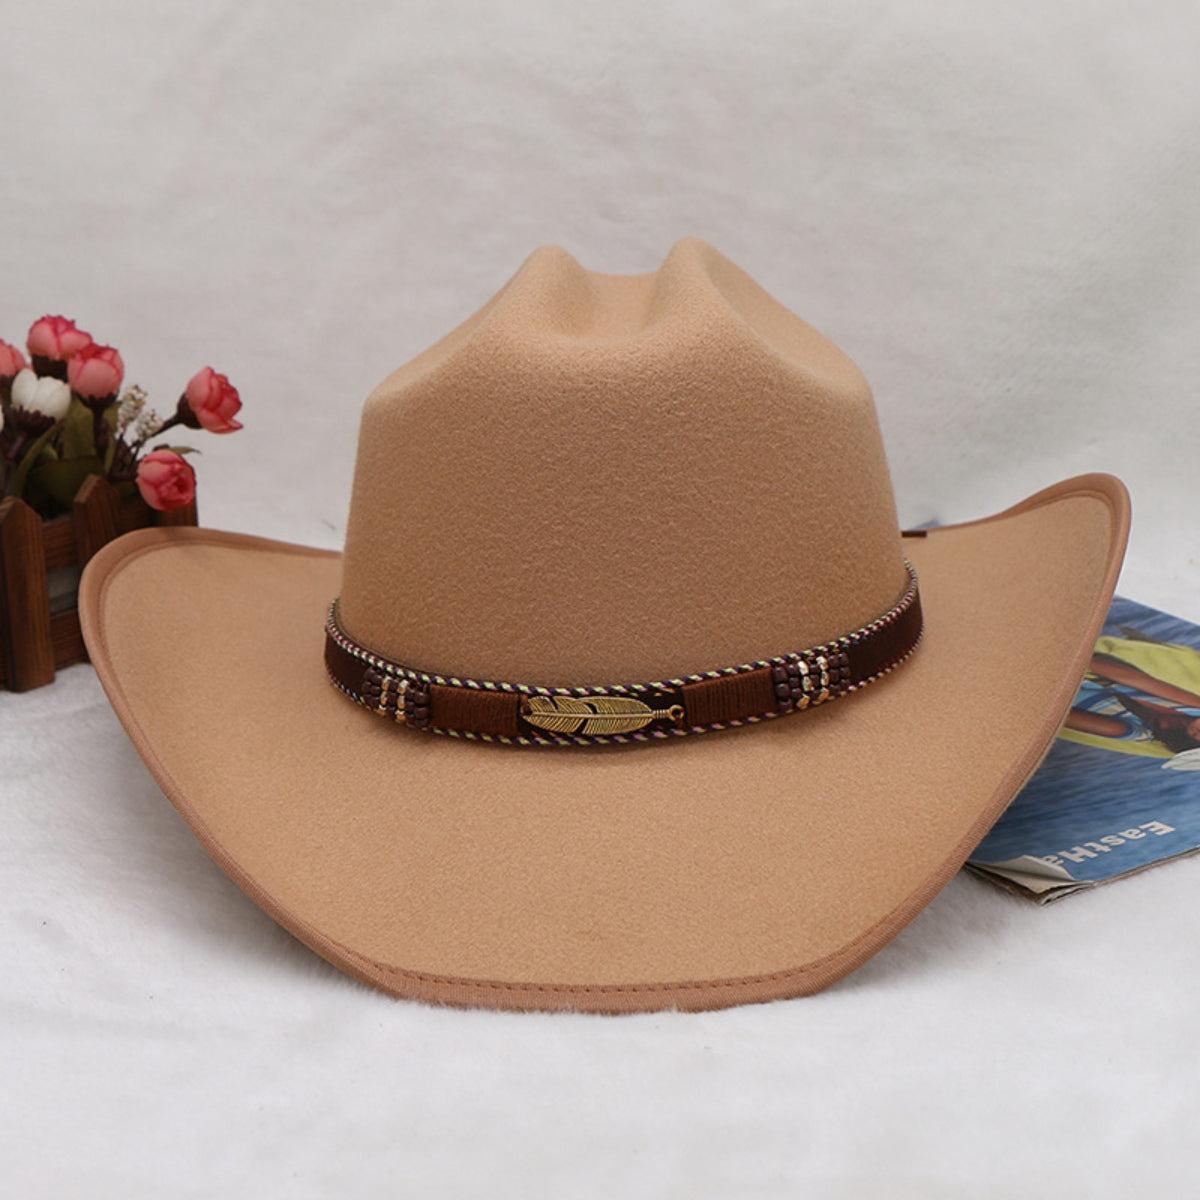 a brown cowboy hat with a brown belt around it